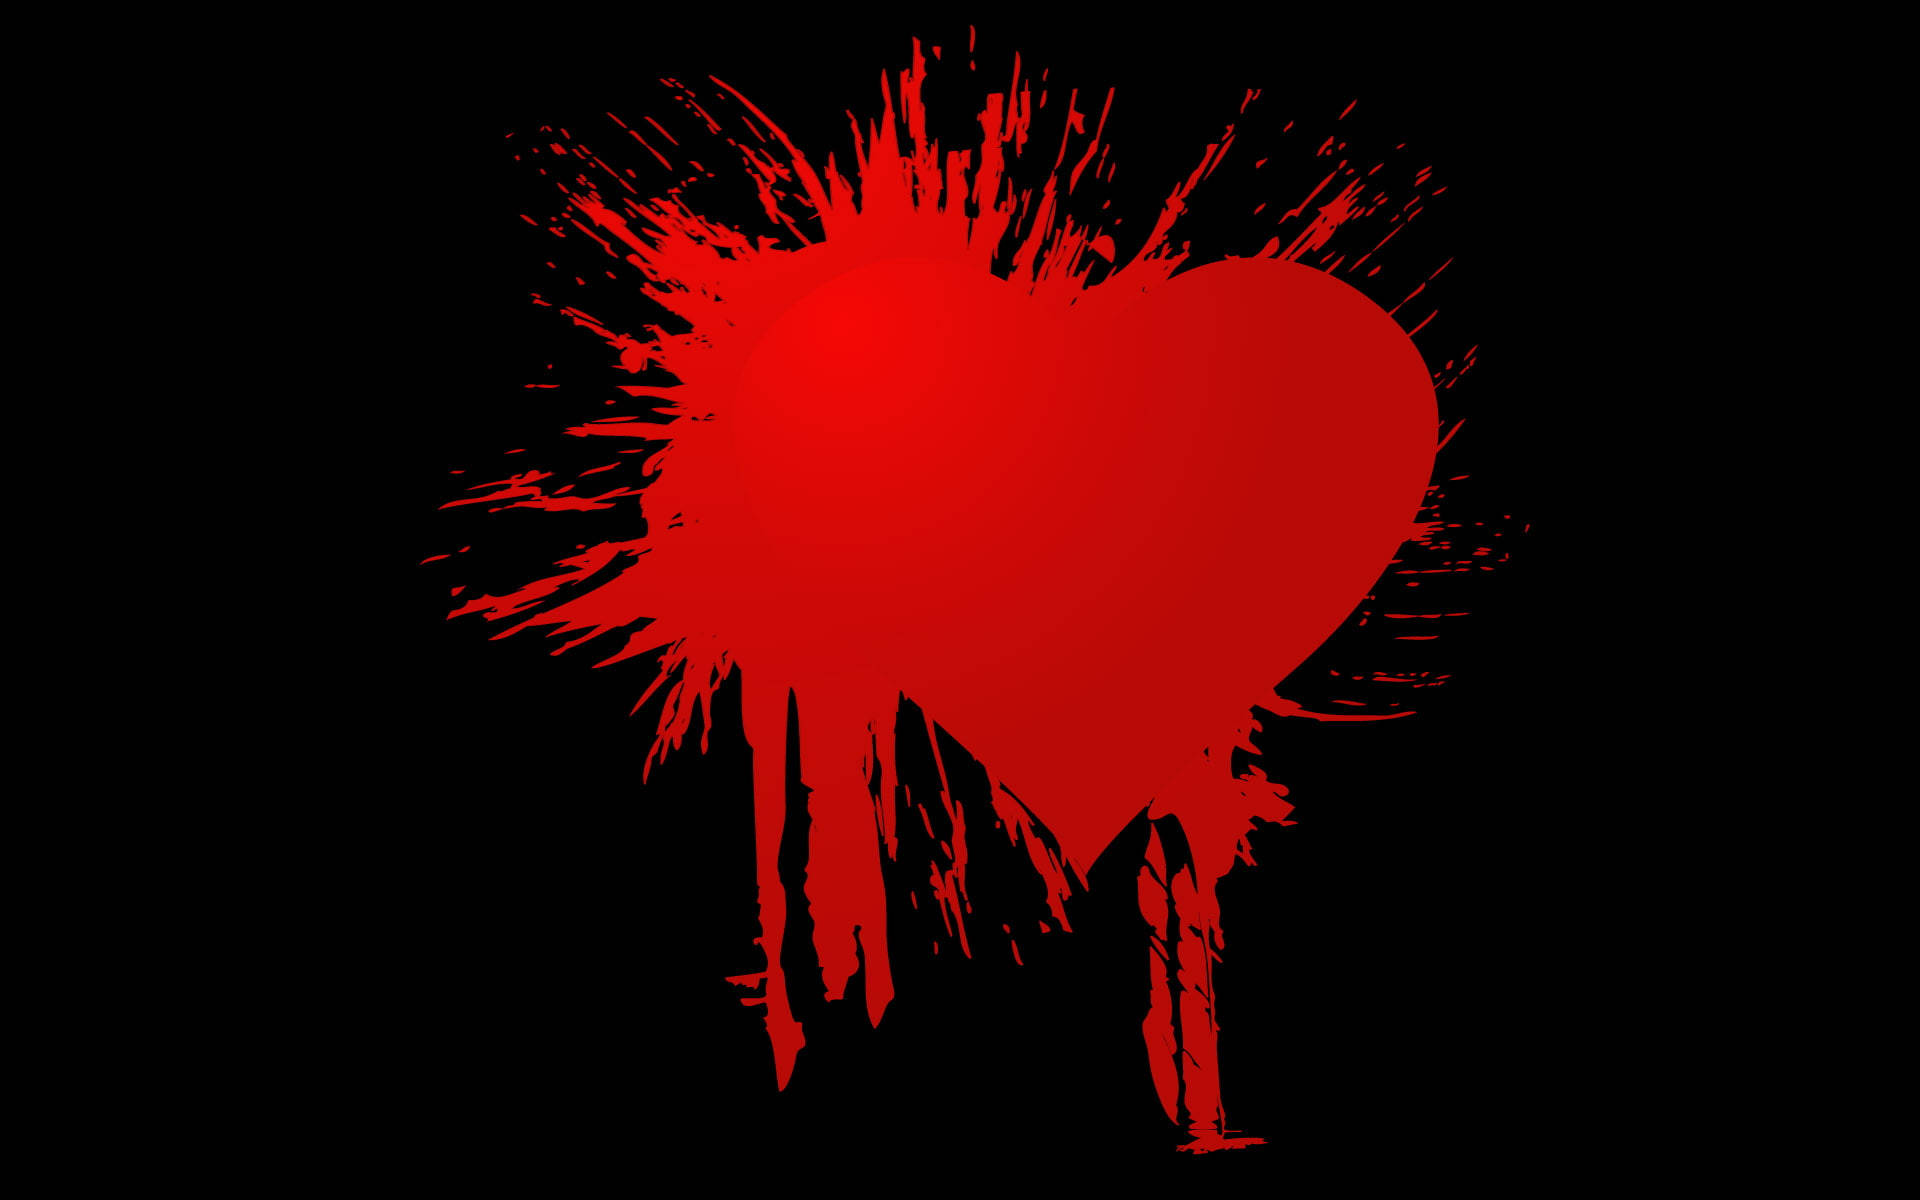 Embodying Heartache - Fractured Heart Illustration